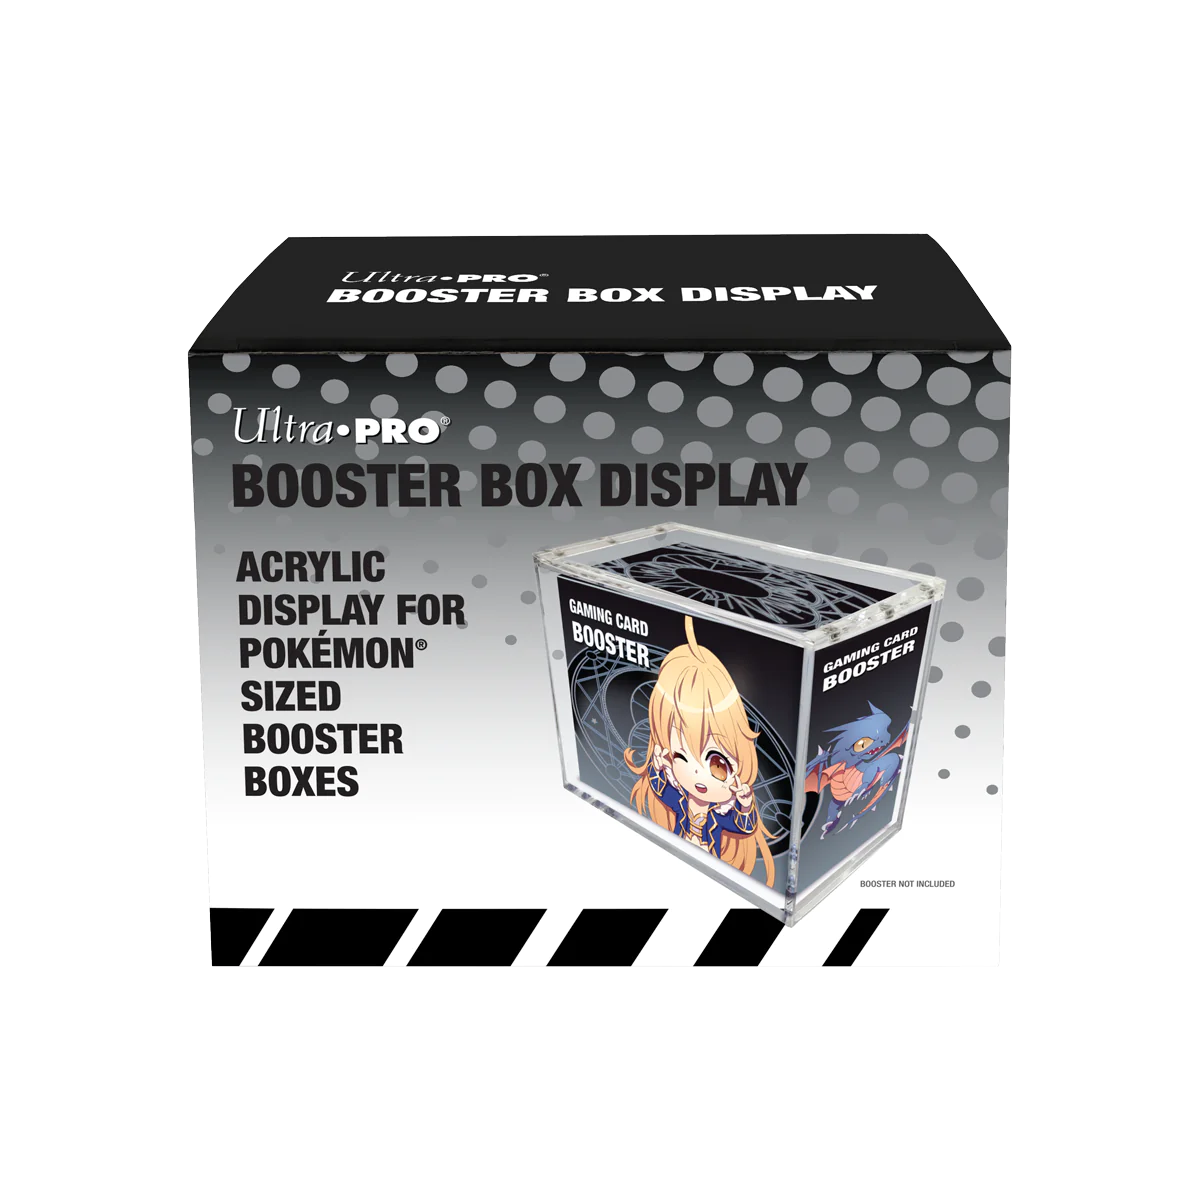 Ultra Pro Acrylic Booster Box Display for Pokémon - n4ytcg